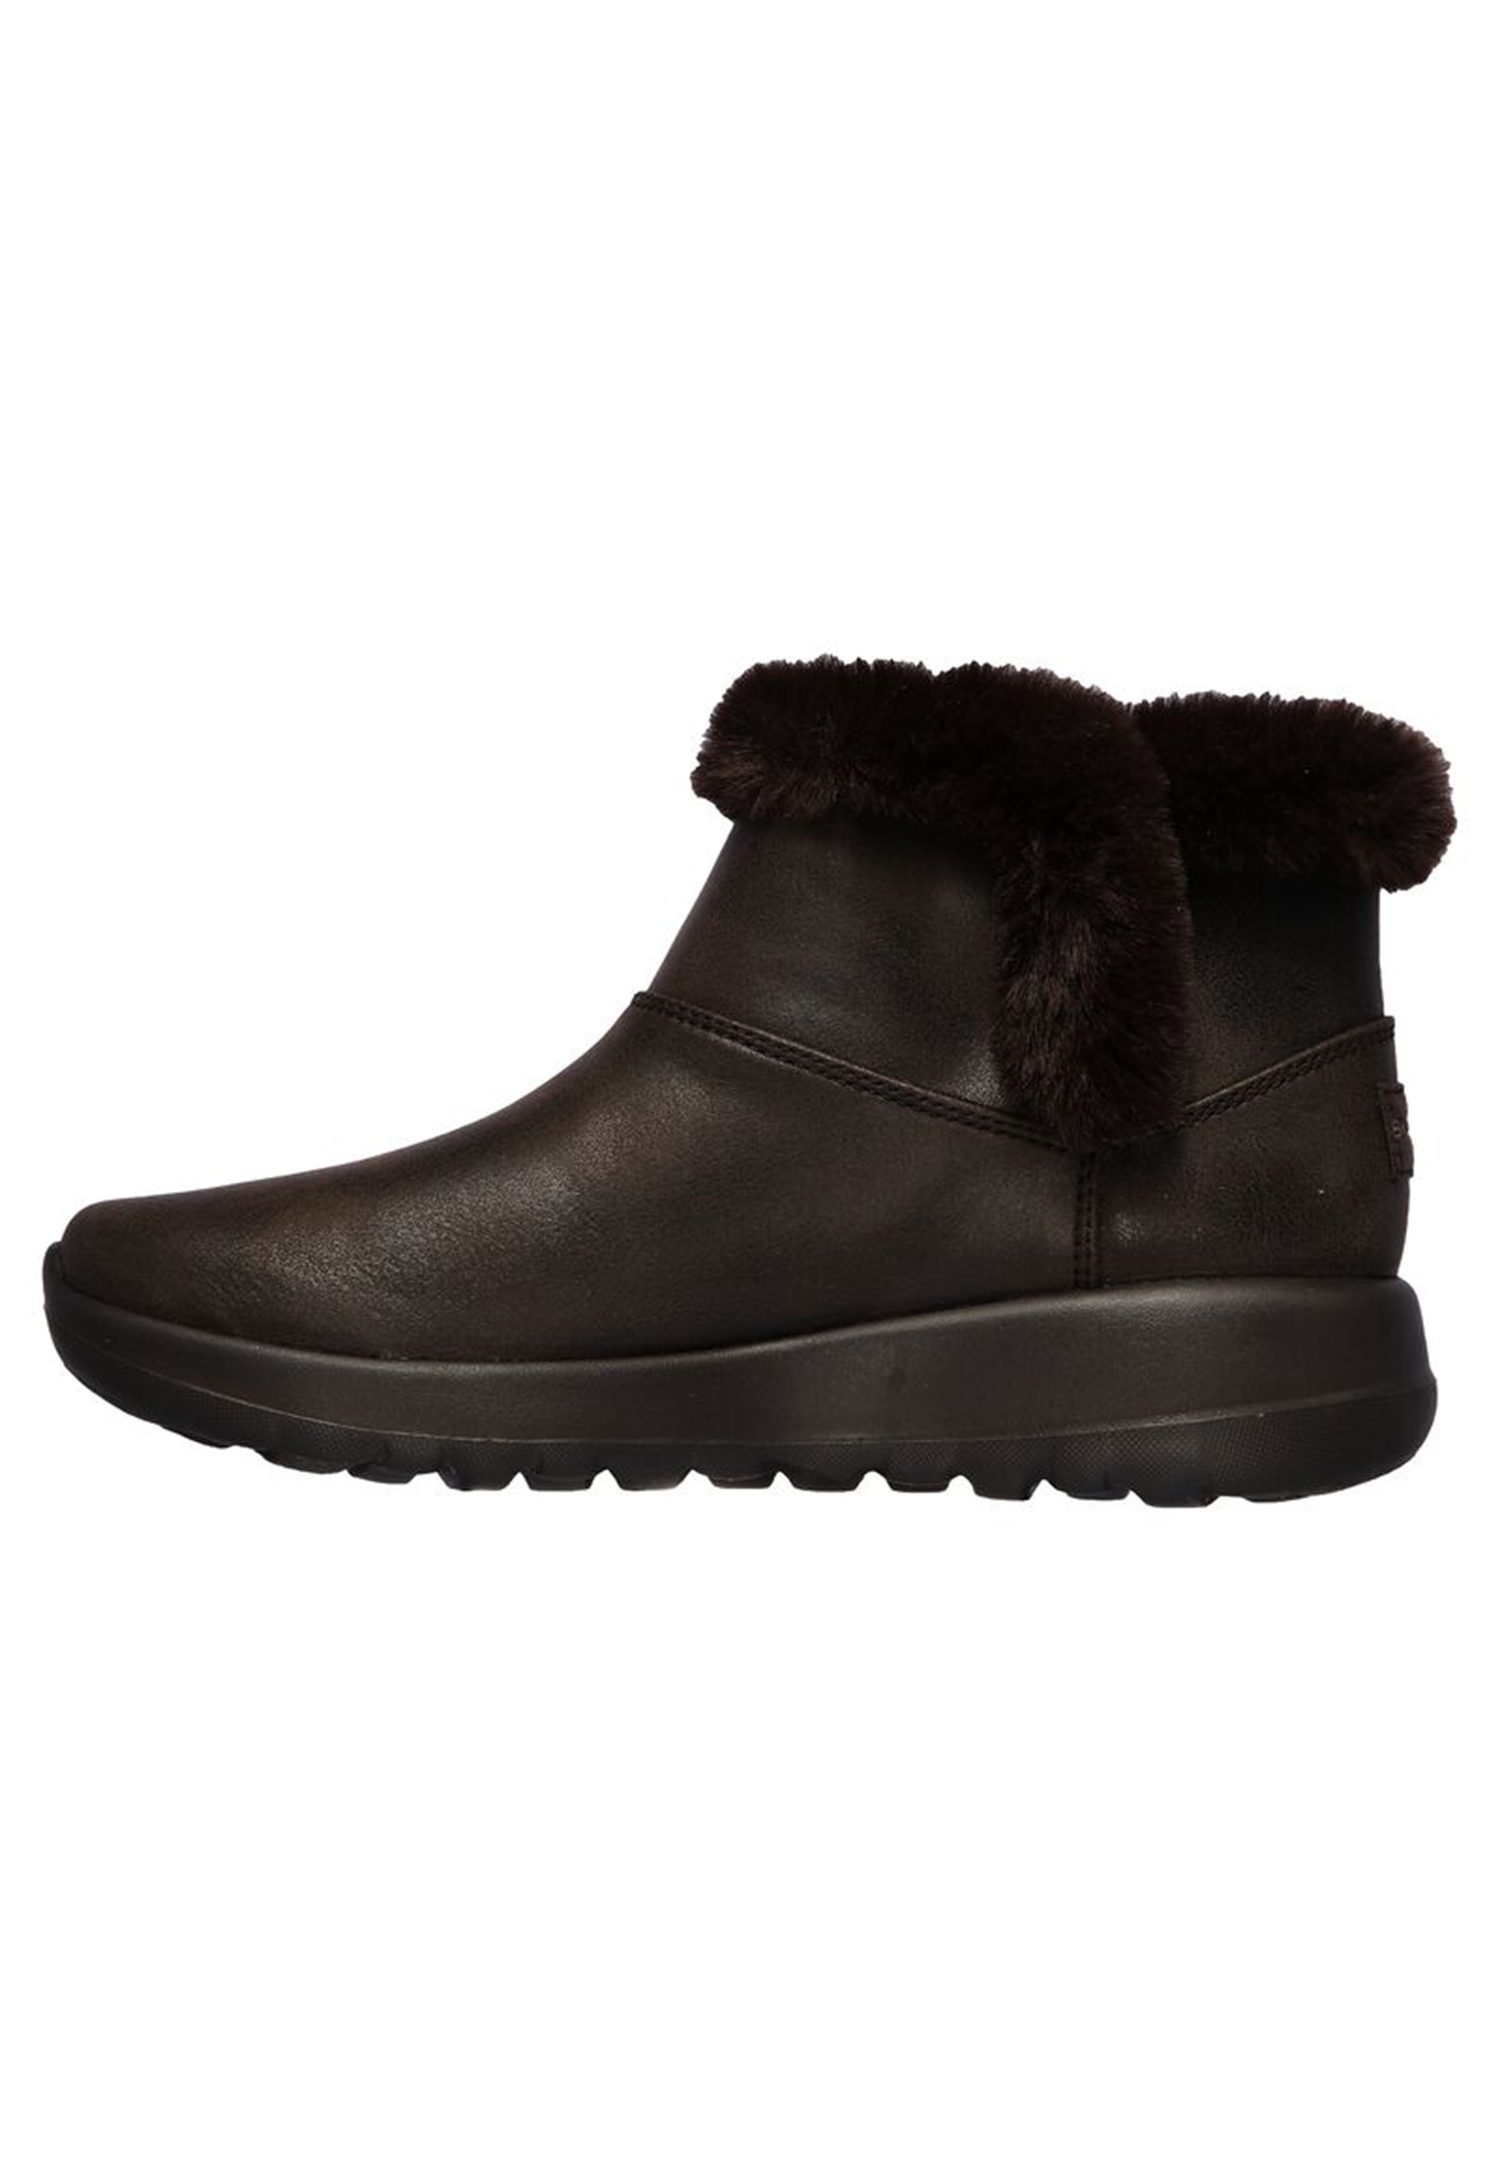 Skechers O-T-G Womens Boots ON-THE-GO JOY ENDEAVOR Stiefel Damen 144013 CHOC braun  